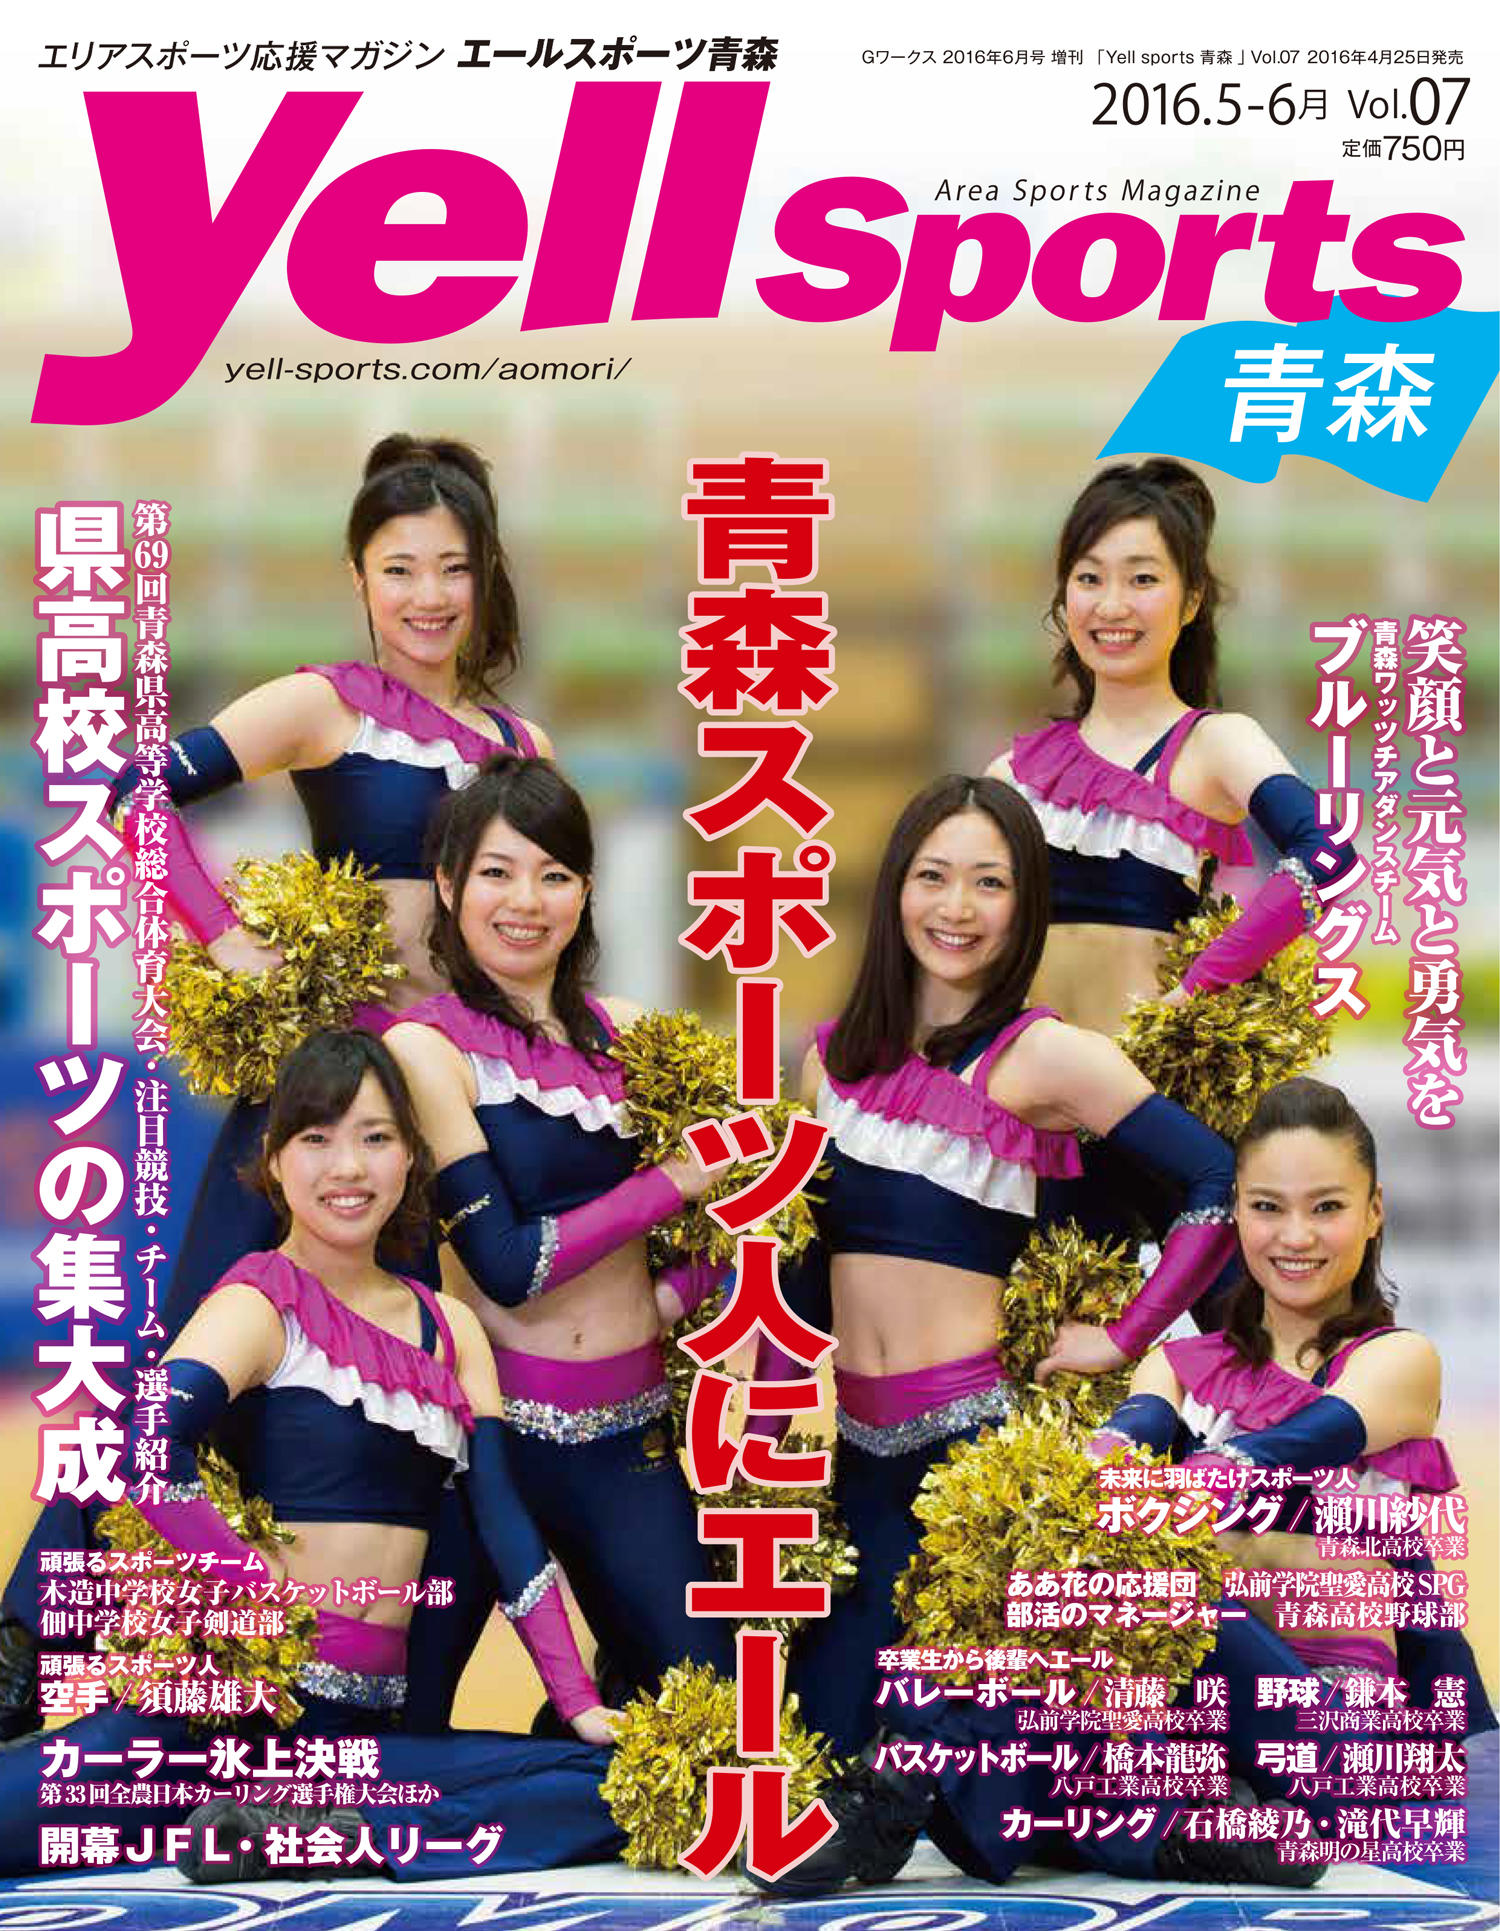 http://yell-sports.com/aomori/article/2016/ysa07_h1.jpg